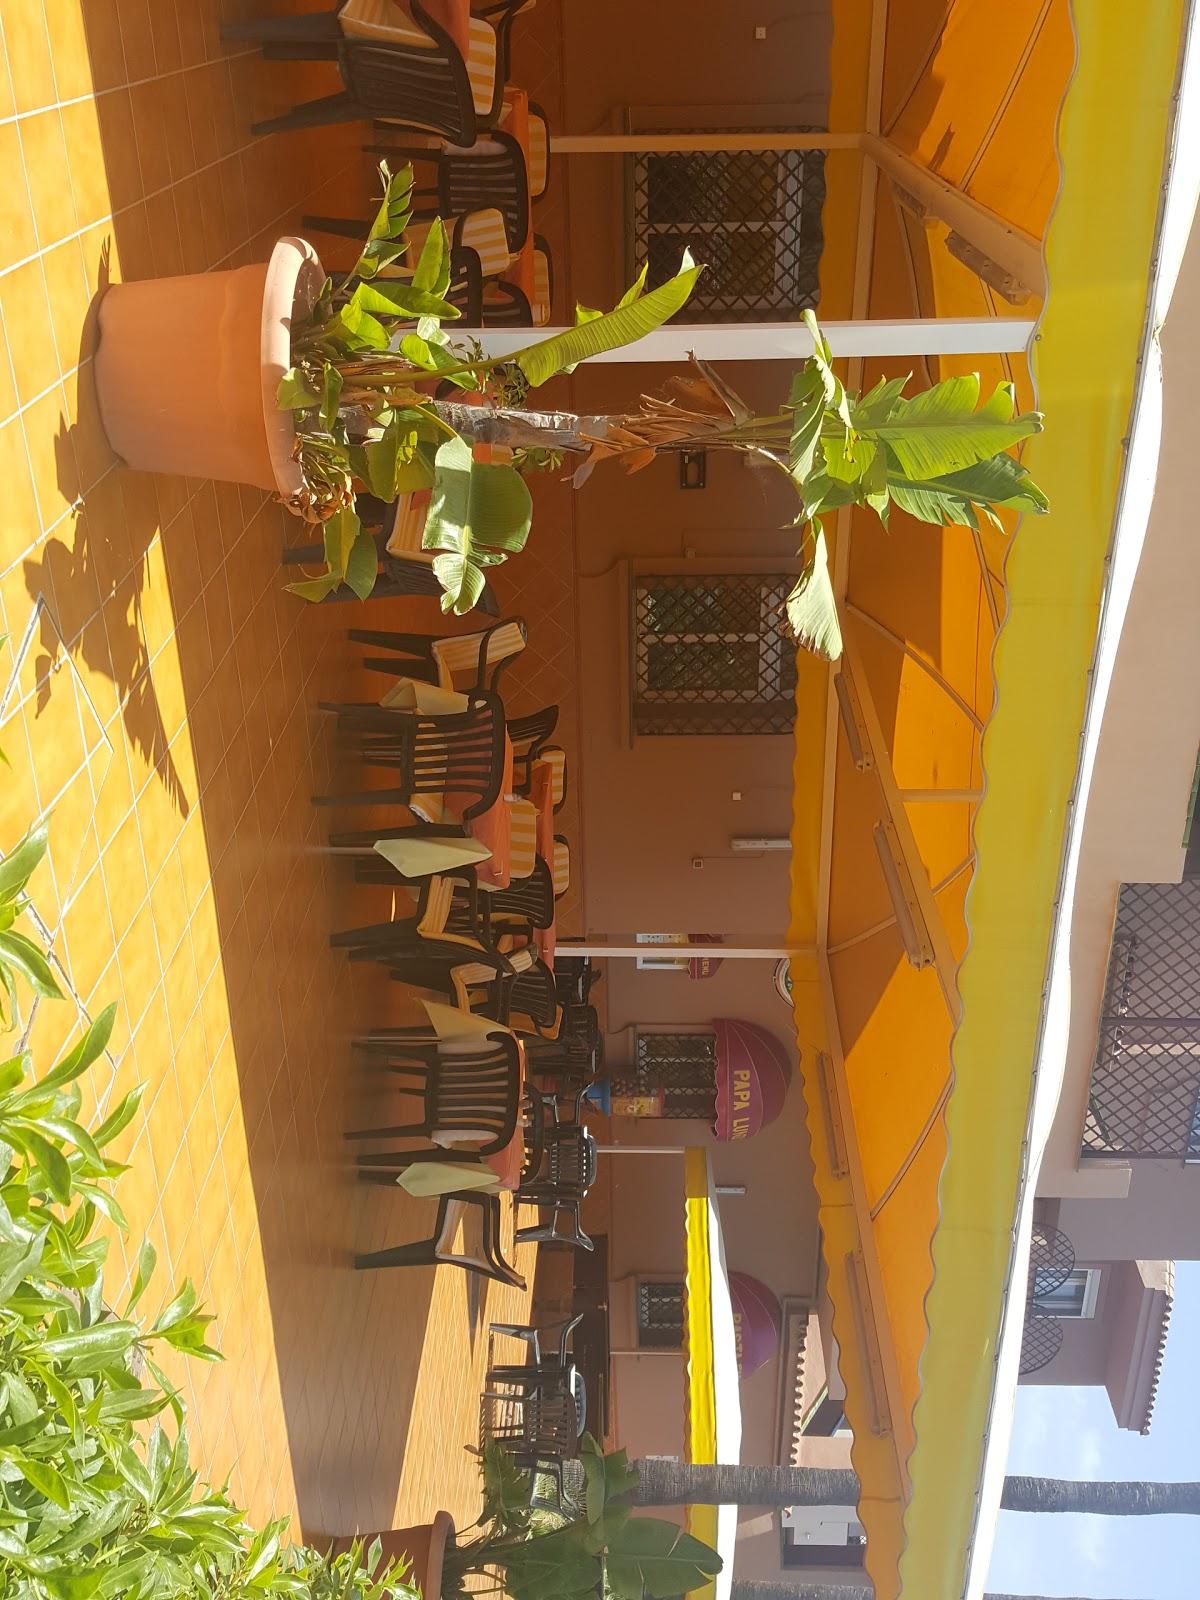 RISTORANTE PIZZERIA PAPA LUIGI, Las Lagunas de Mijas - Restaurant